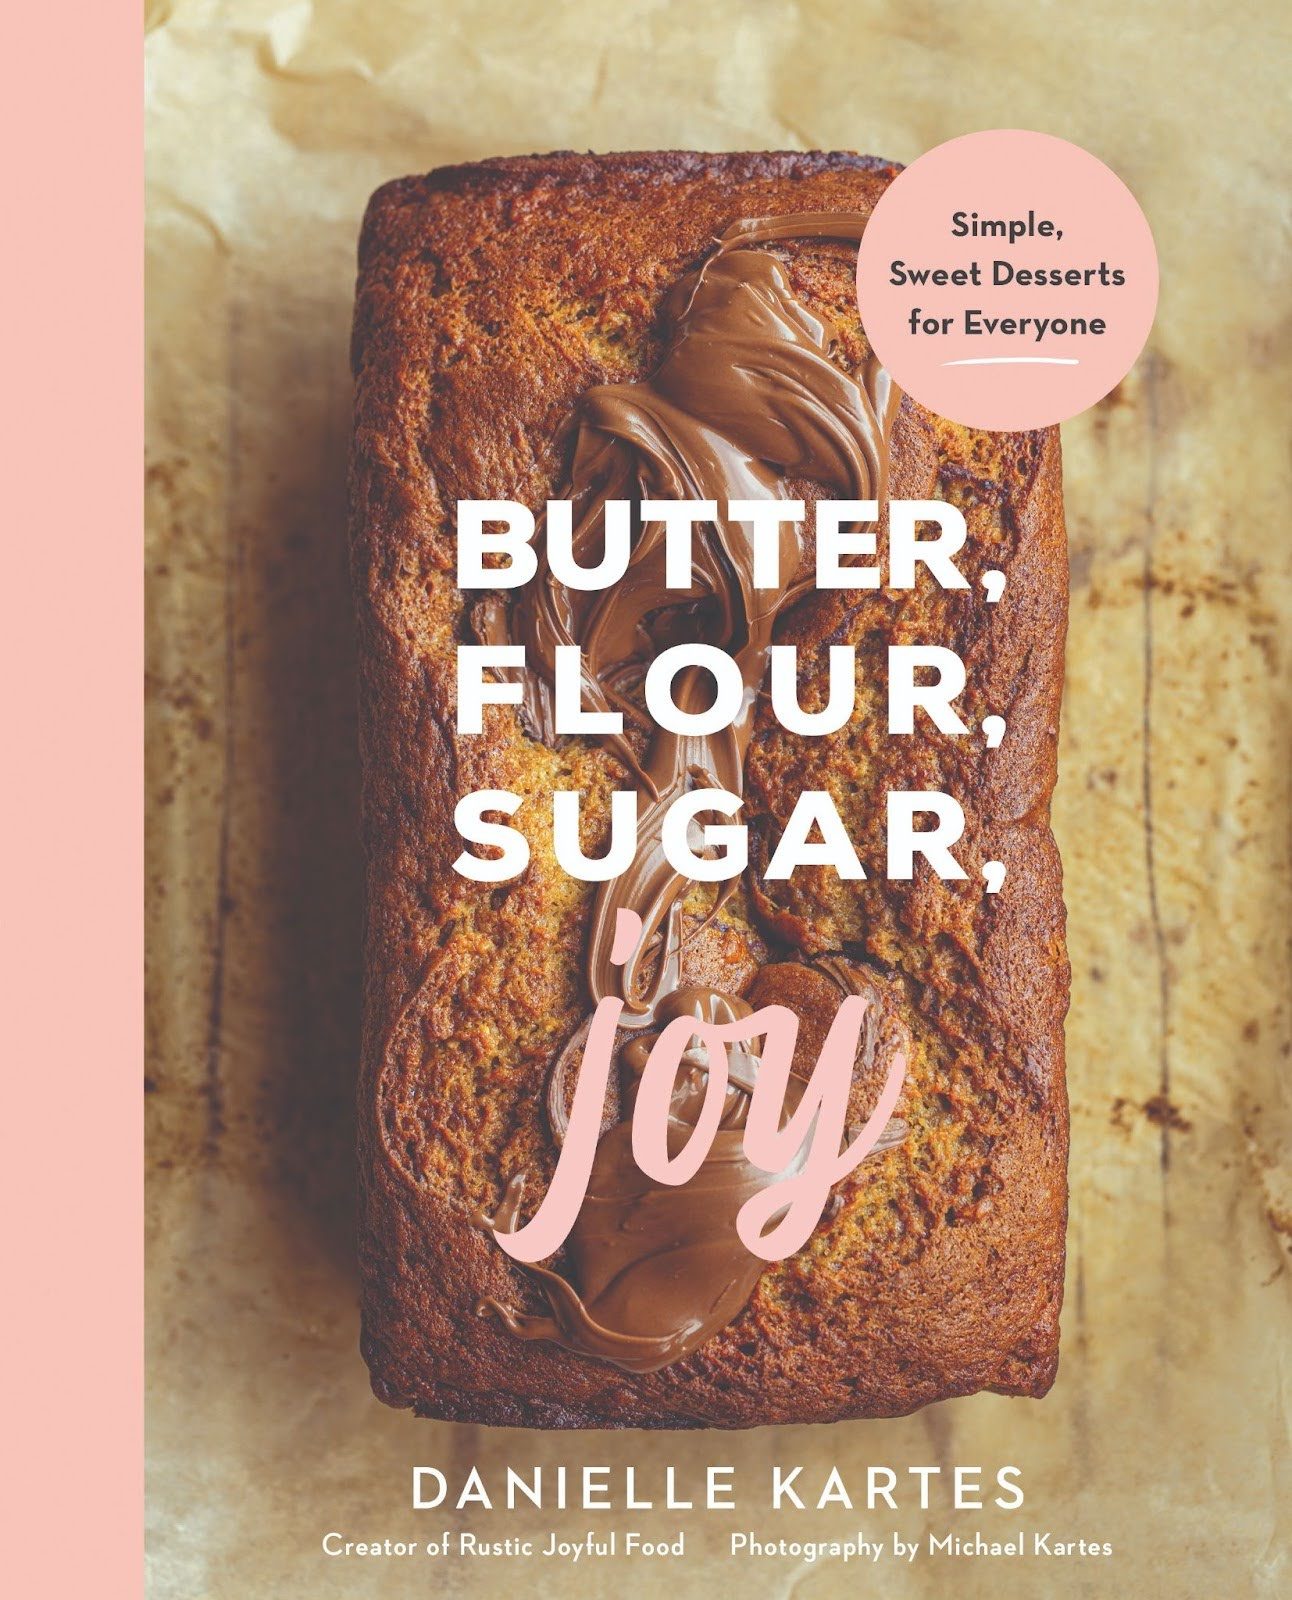 Butter Flour Sugar Joy book cover